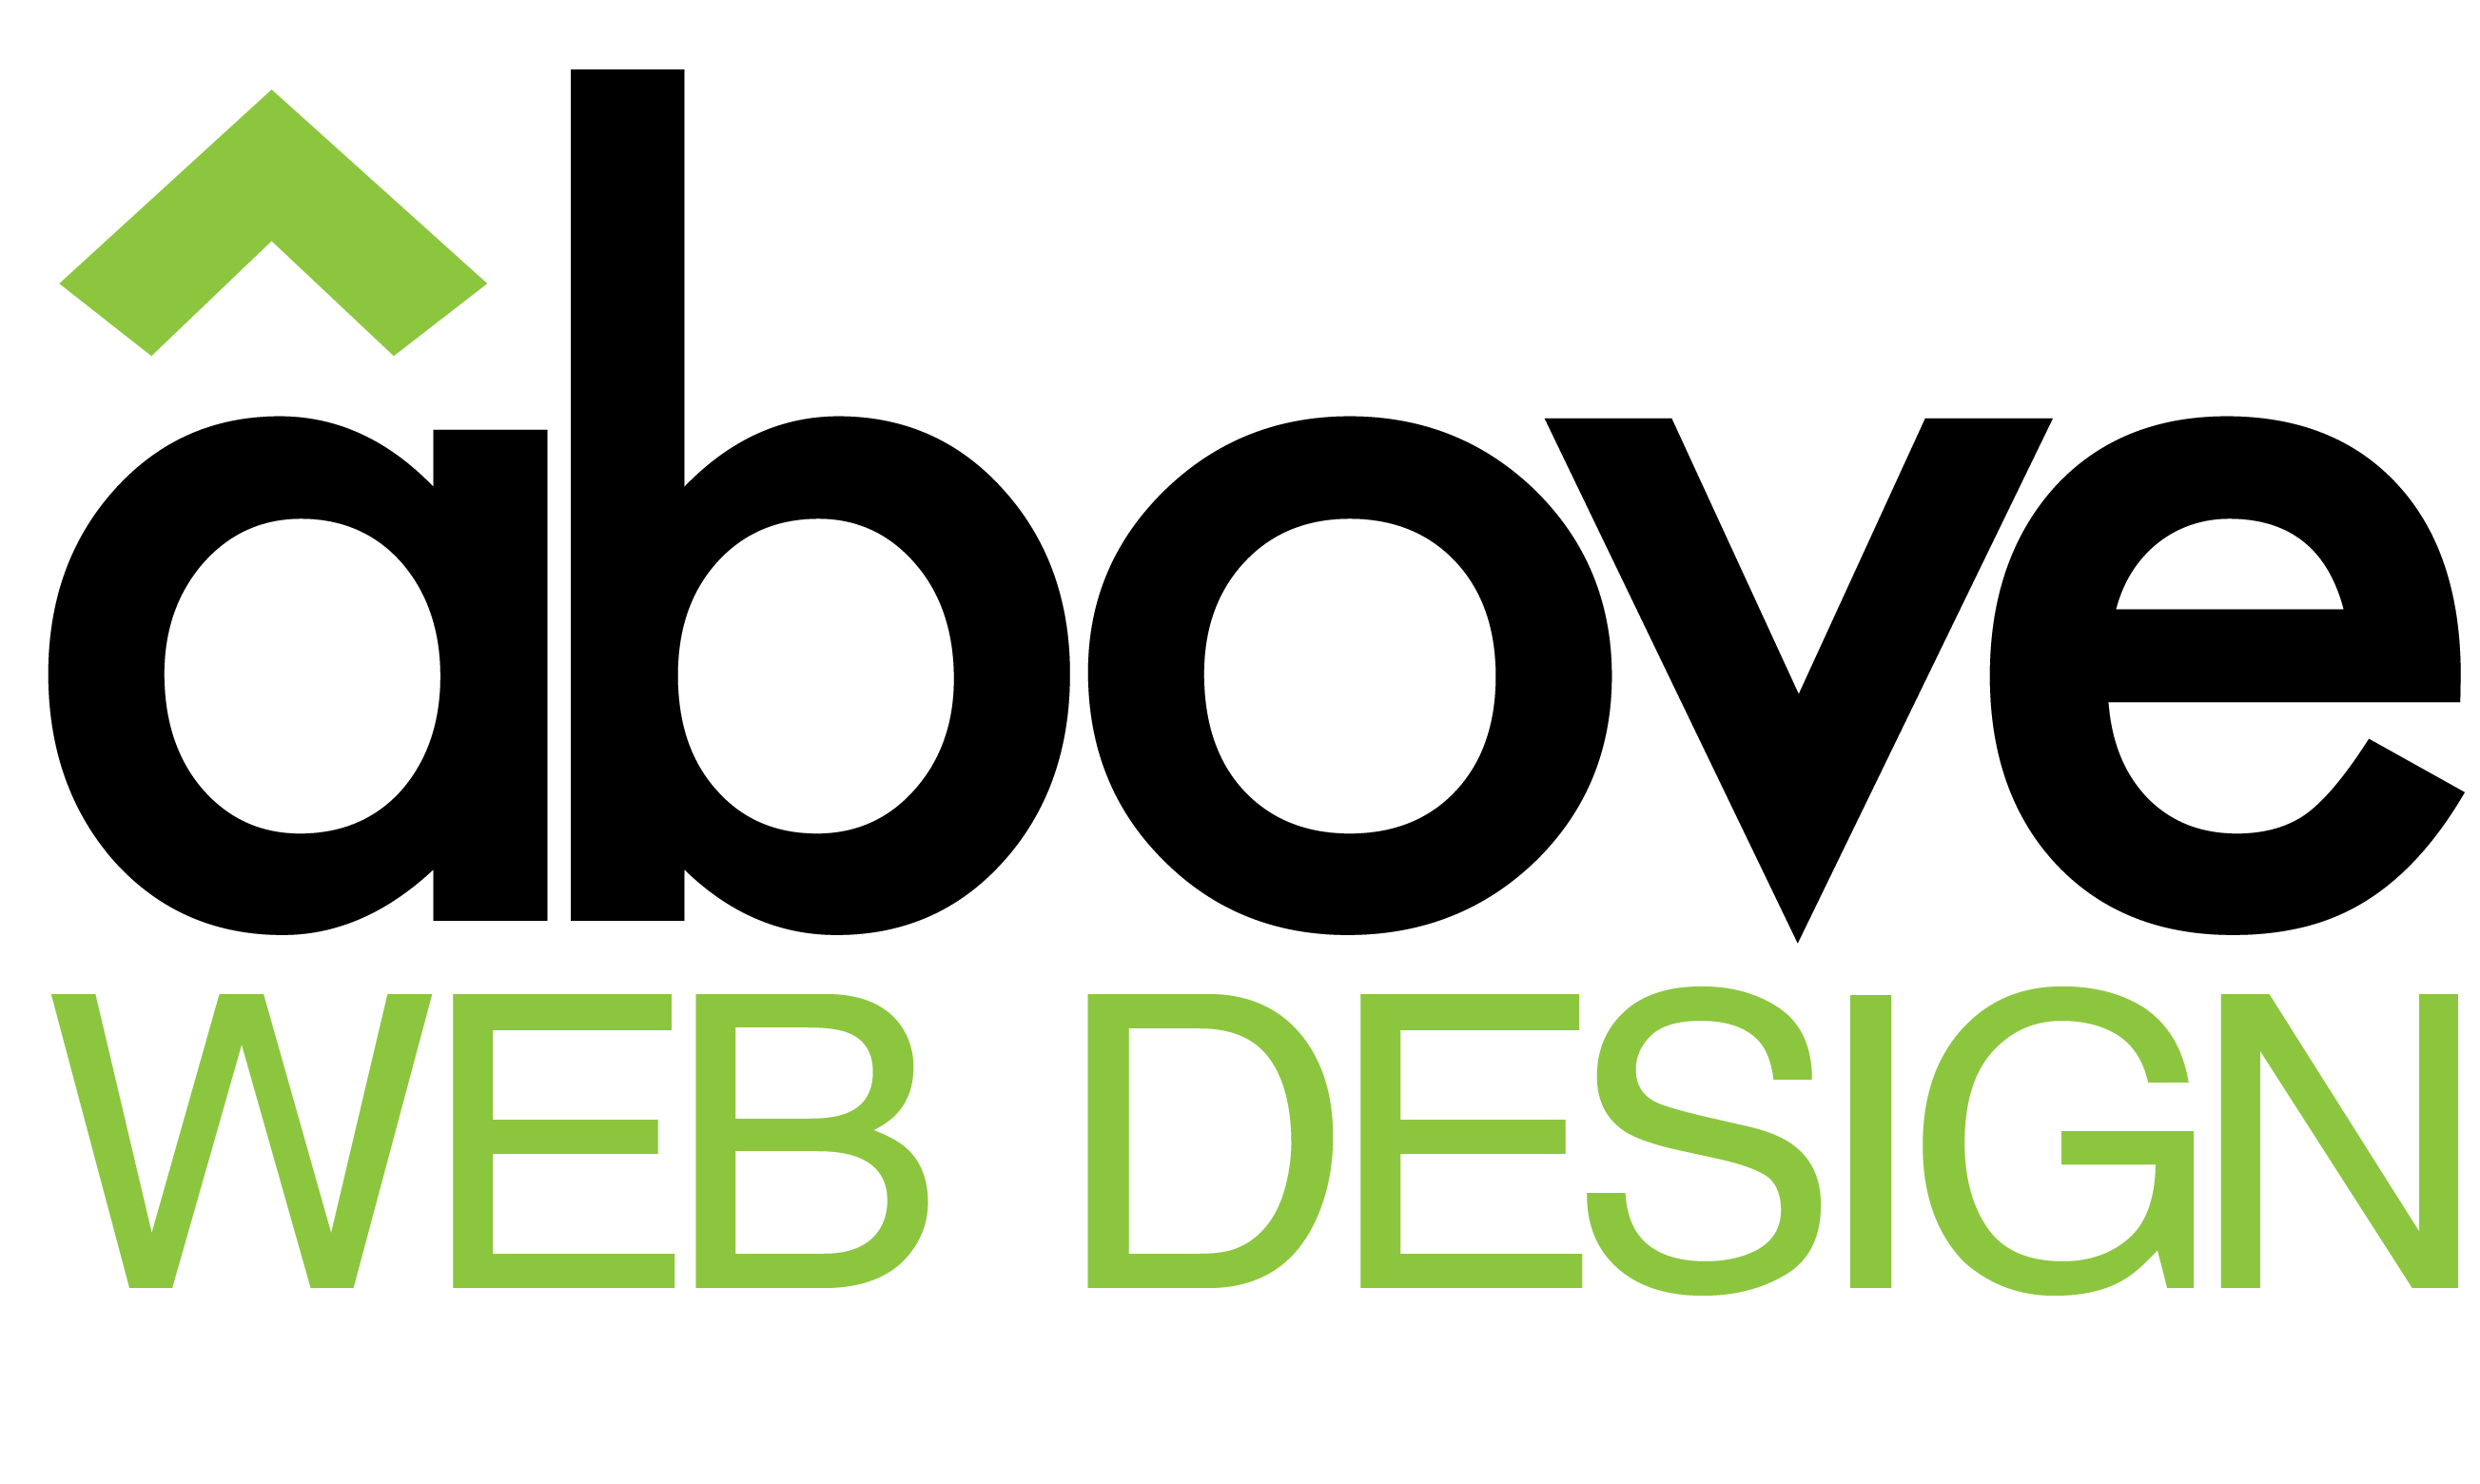 Above Web Design